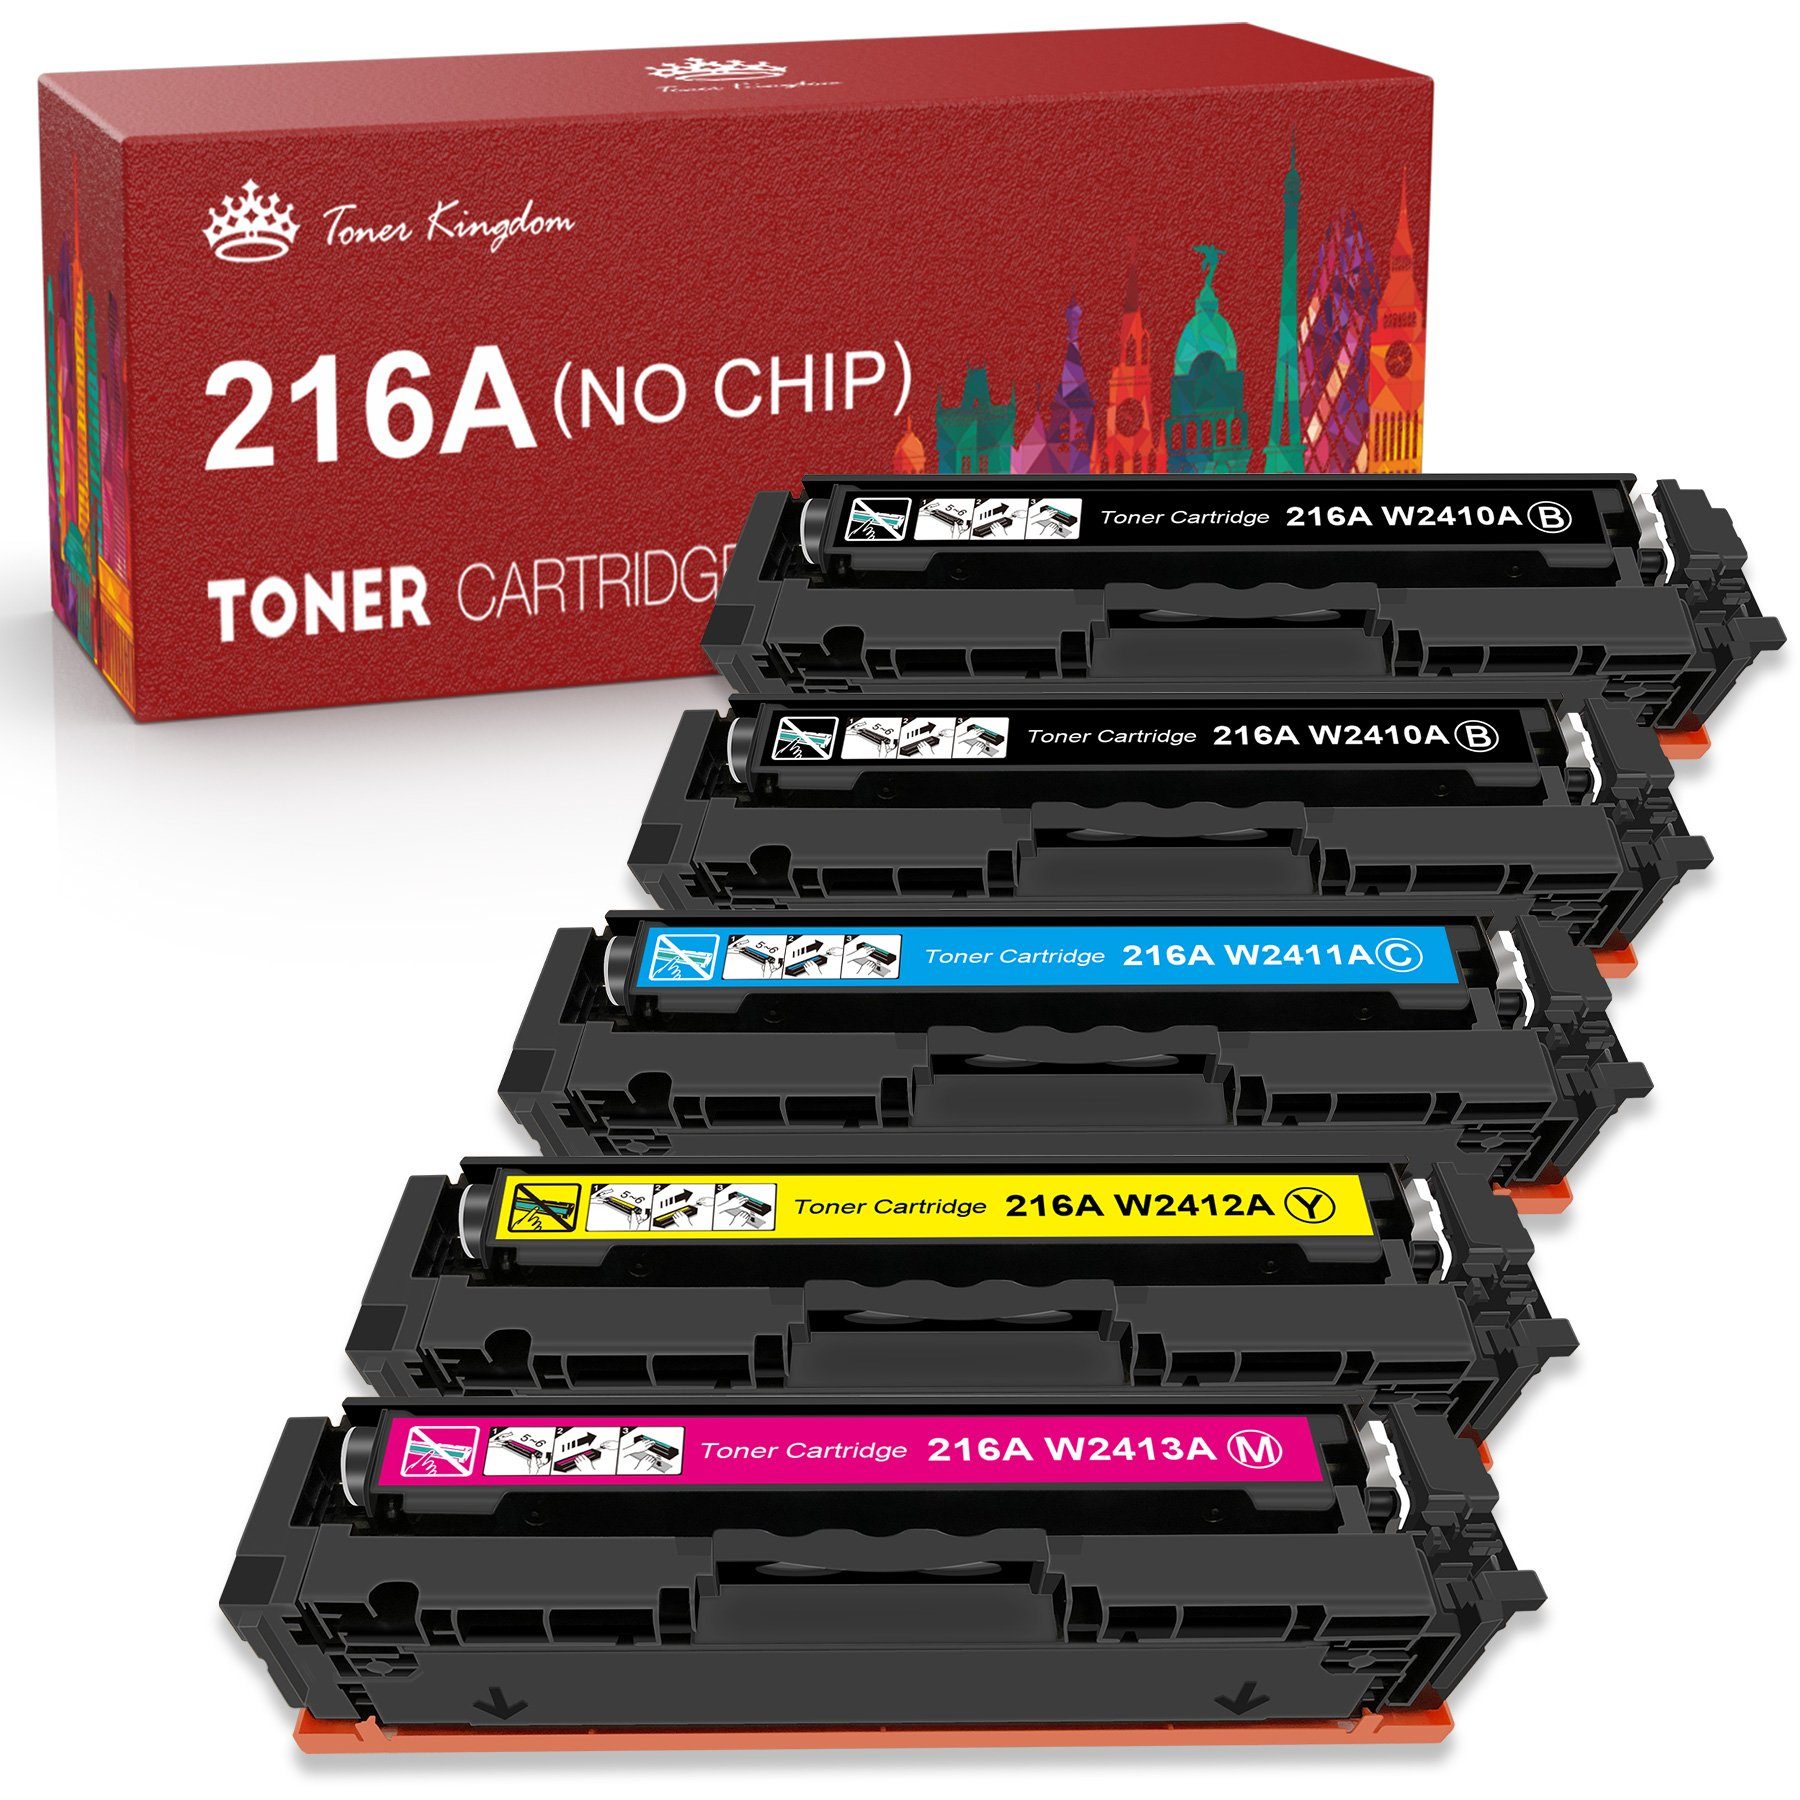 Toner Kingdom Tonerpatrone für HP 216A Ersatz 216 A Kein Chip W2410A W2411A